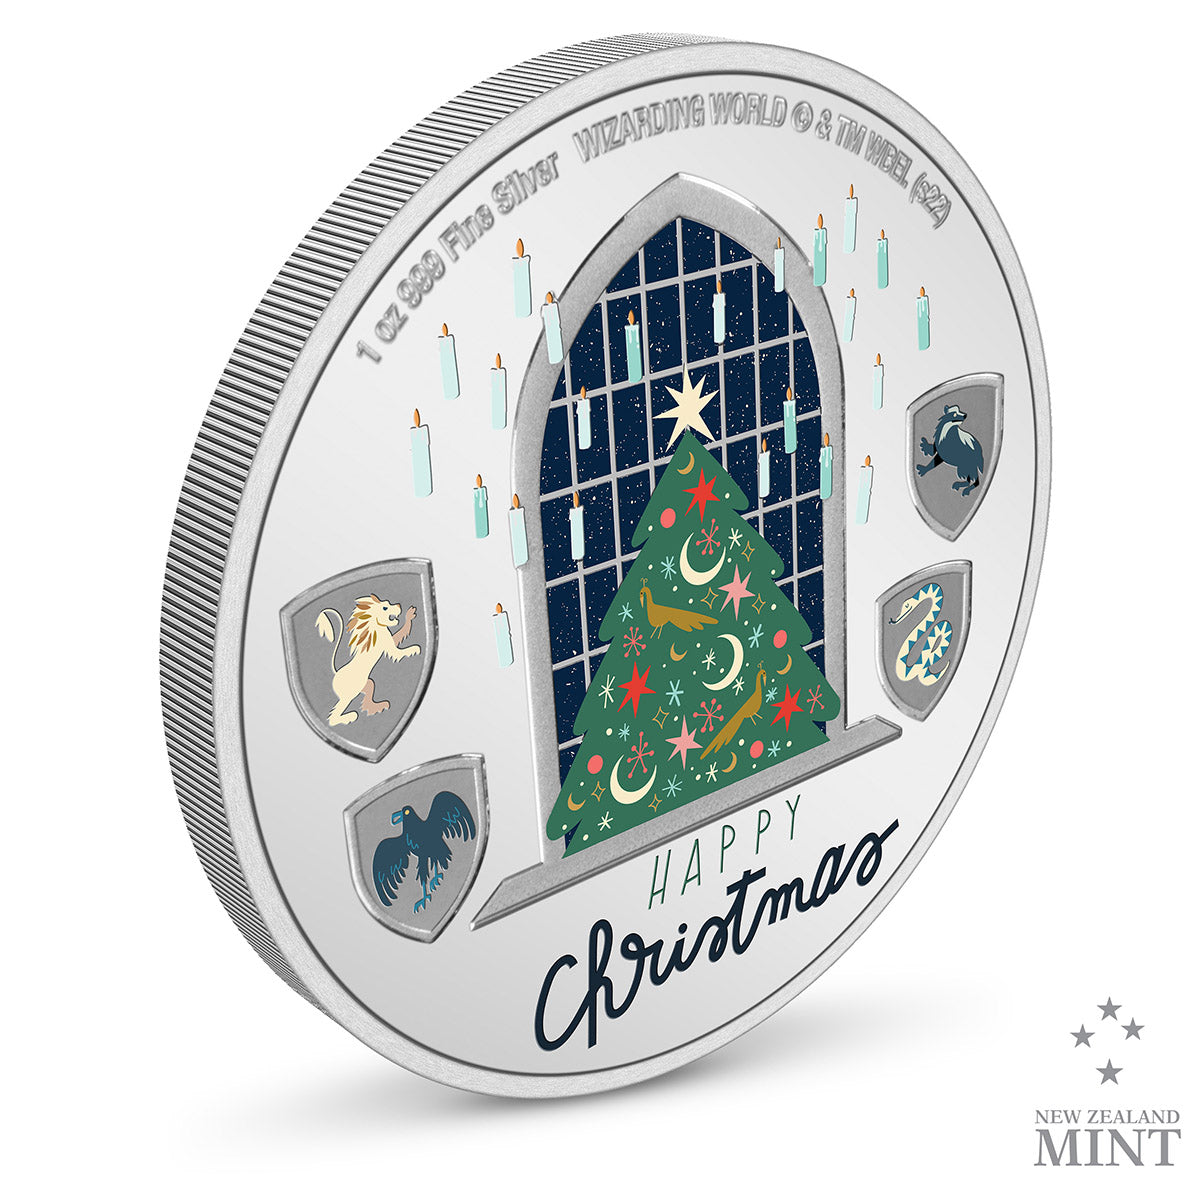 Niue Mint 2022 Harry Potter Season’s Greetings 2022 1 oz Silver Coin